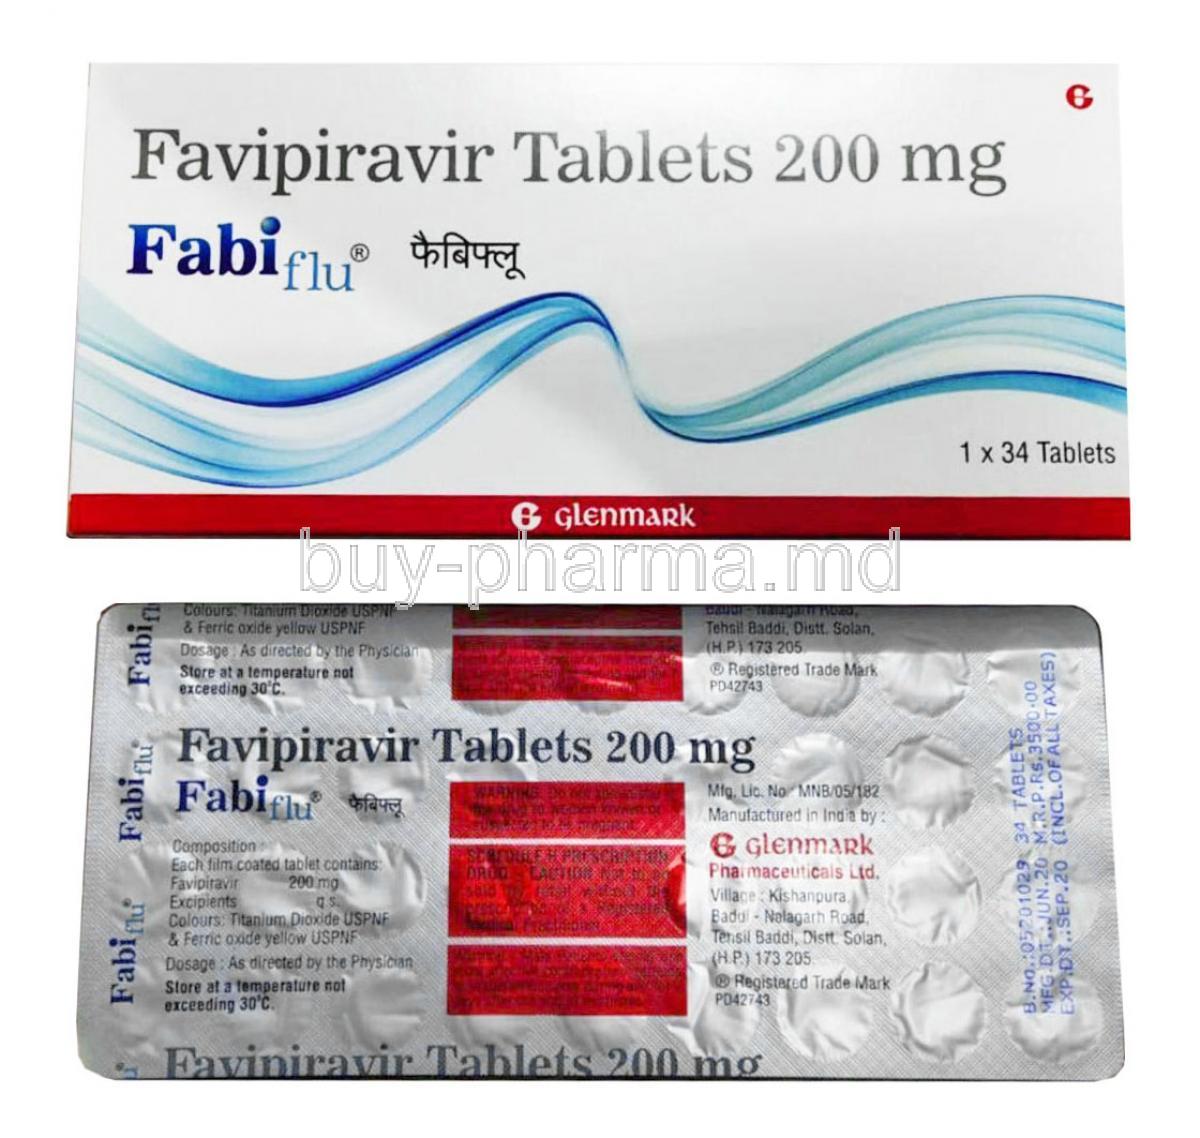 Fabi Flu, Favipiravir 200mg box and tablet